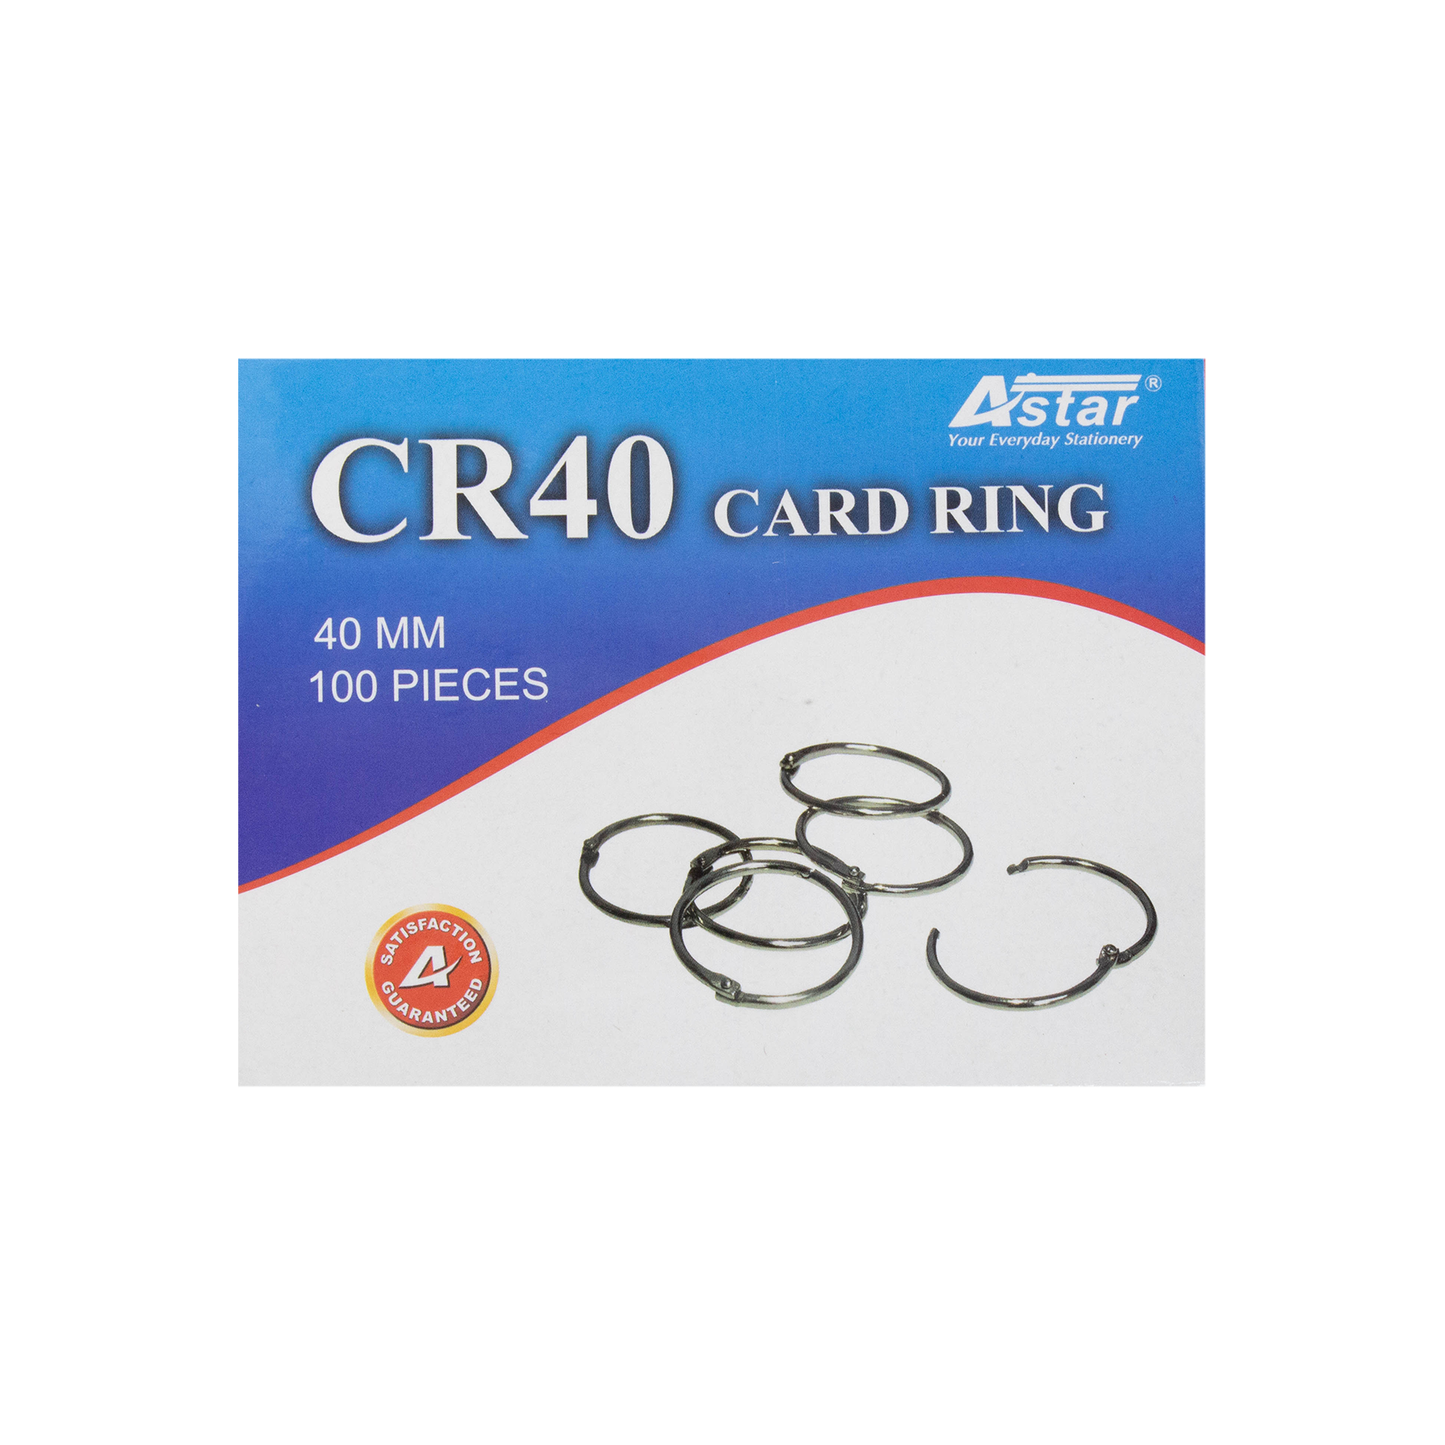 CR40 - ASTAR CARD RING